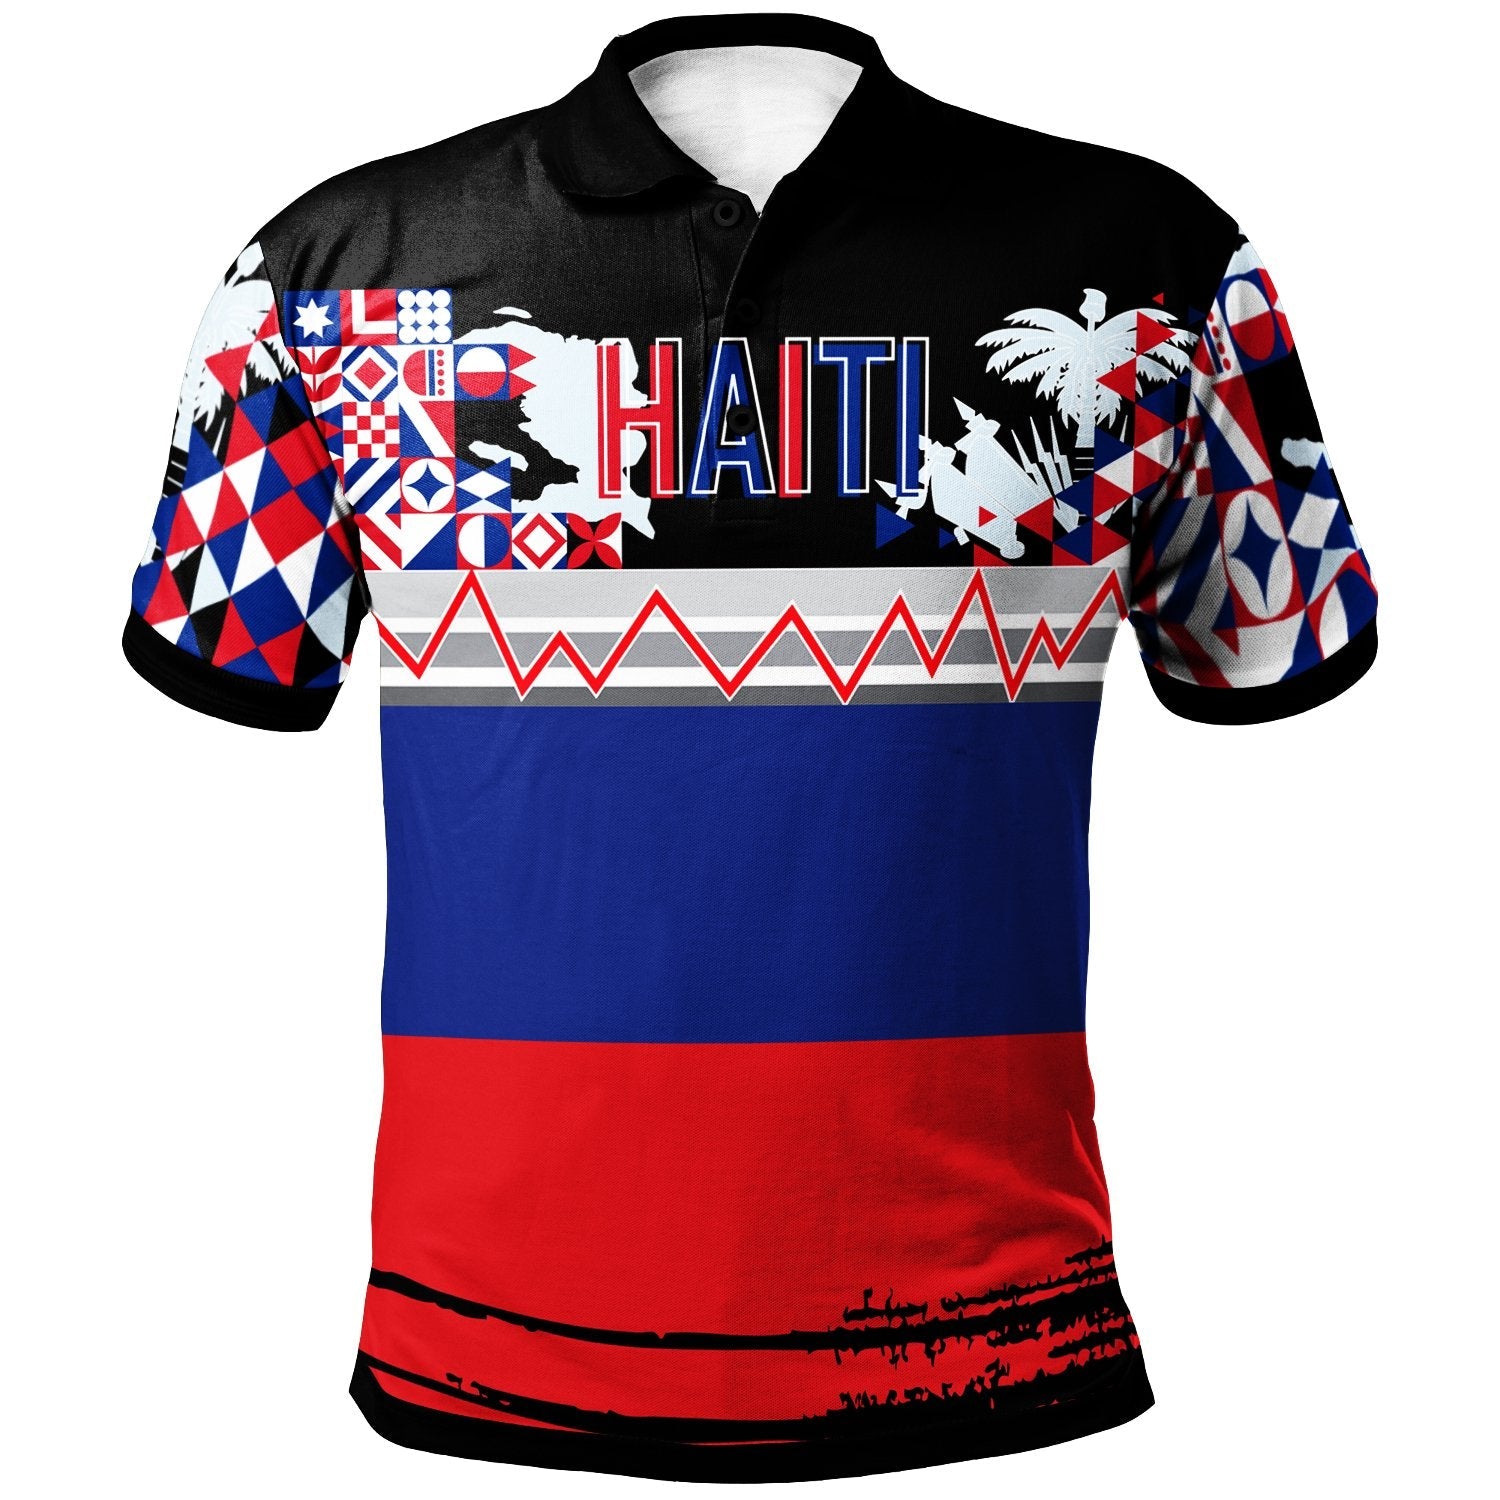 haiti-polo-shirt-youthful-style